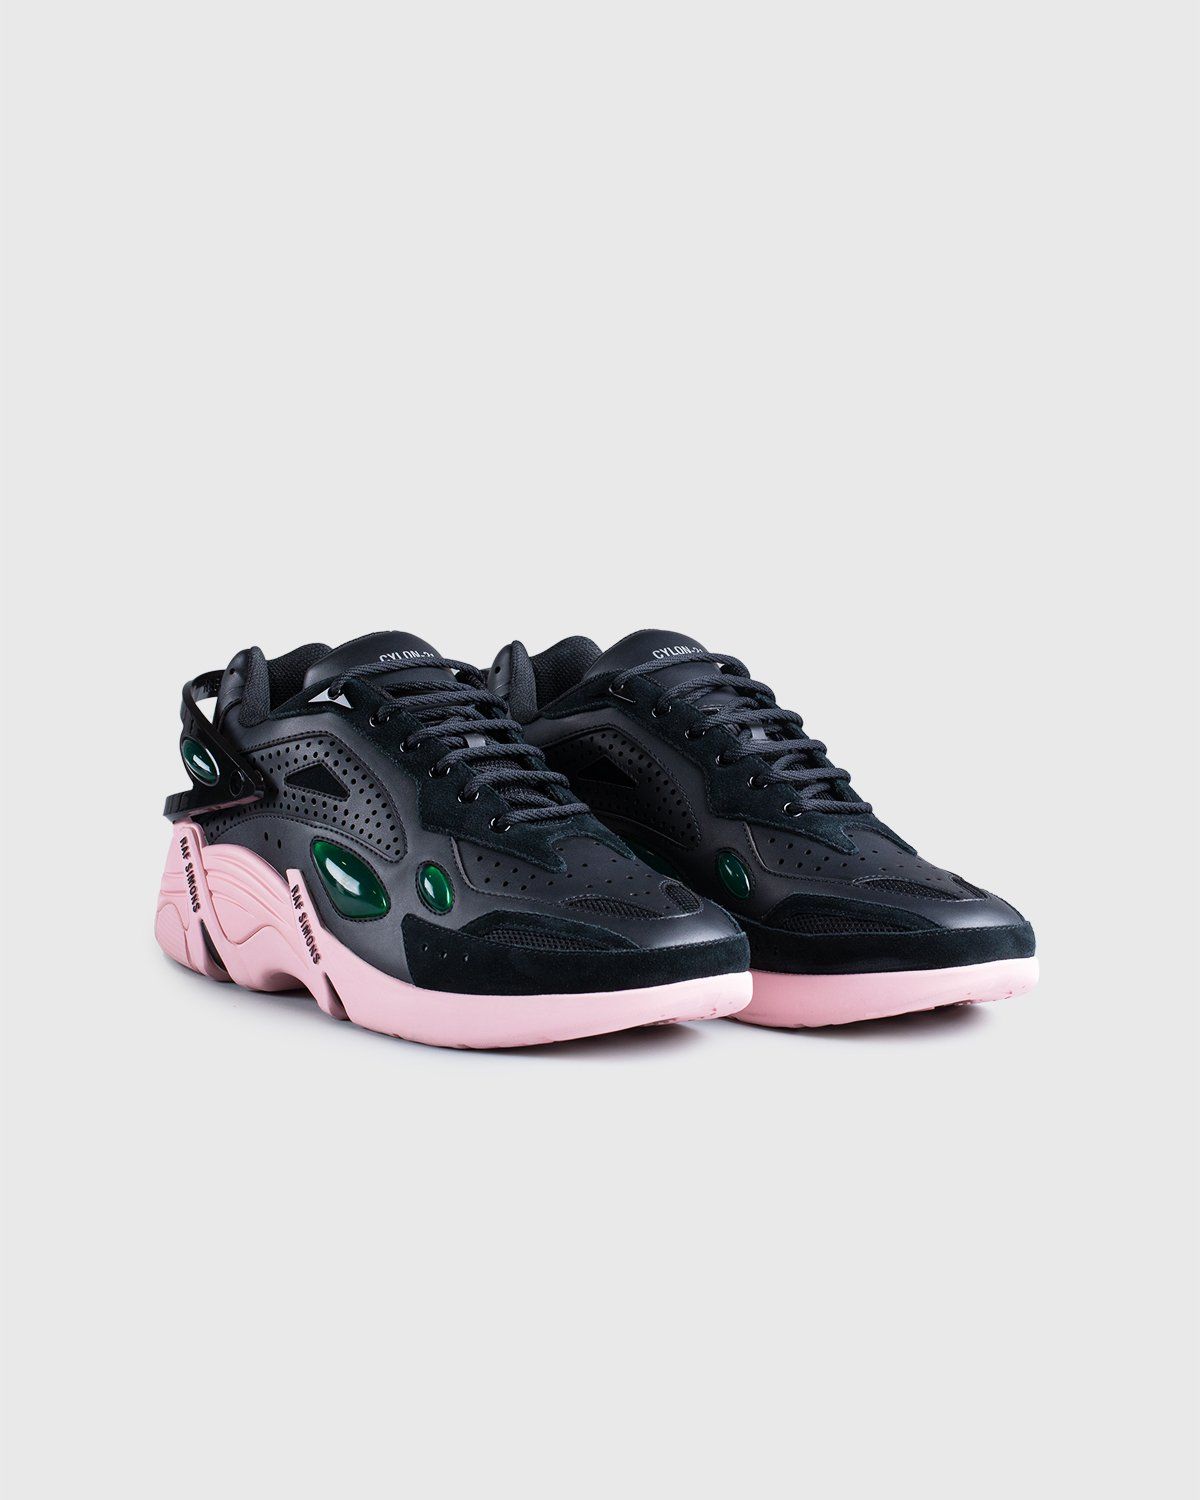 Raf Simons – Cylon Black/Pink - Low Top Sneakers - Black - Image 3